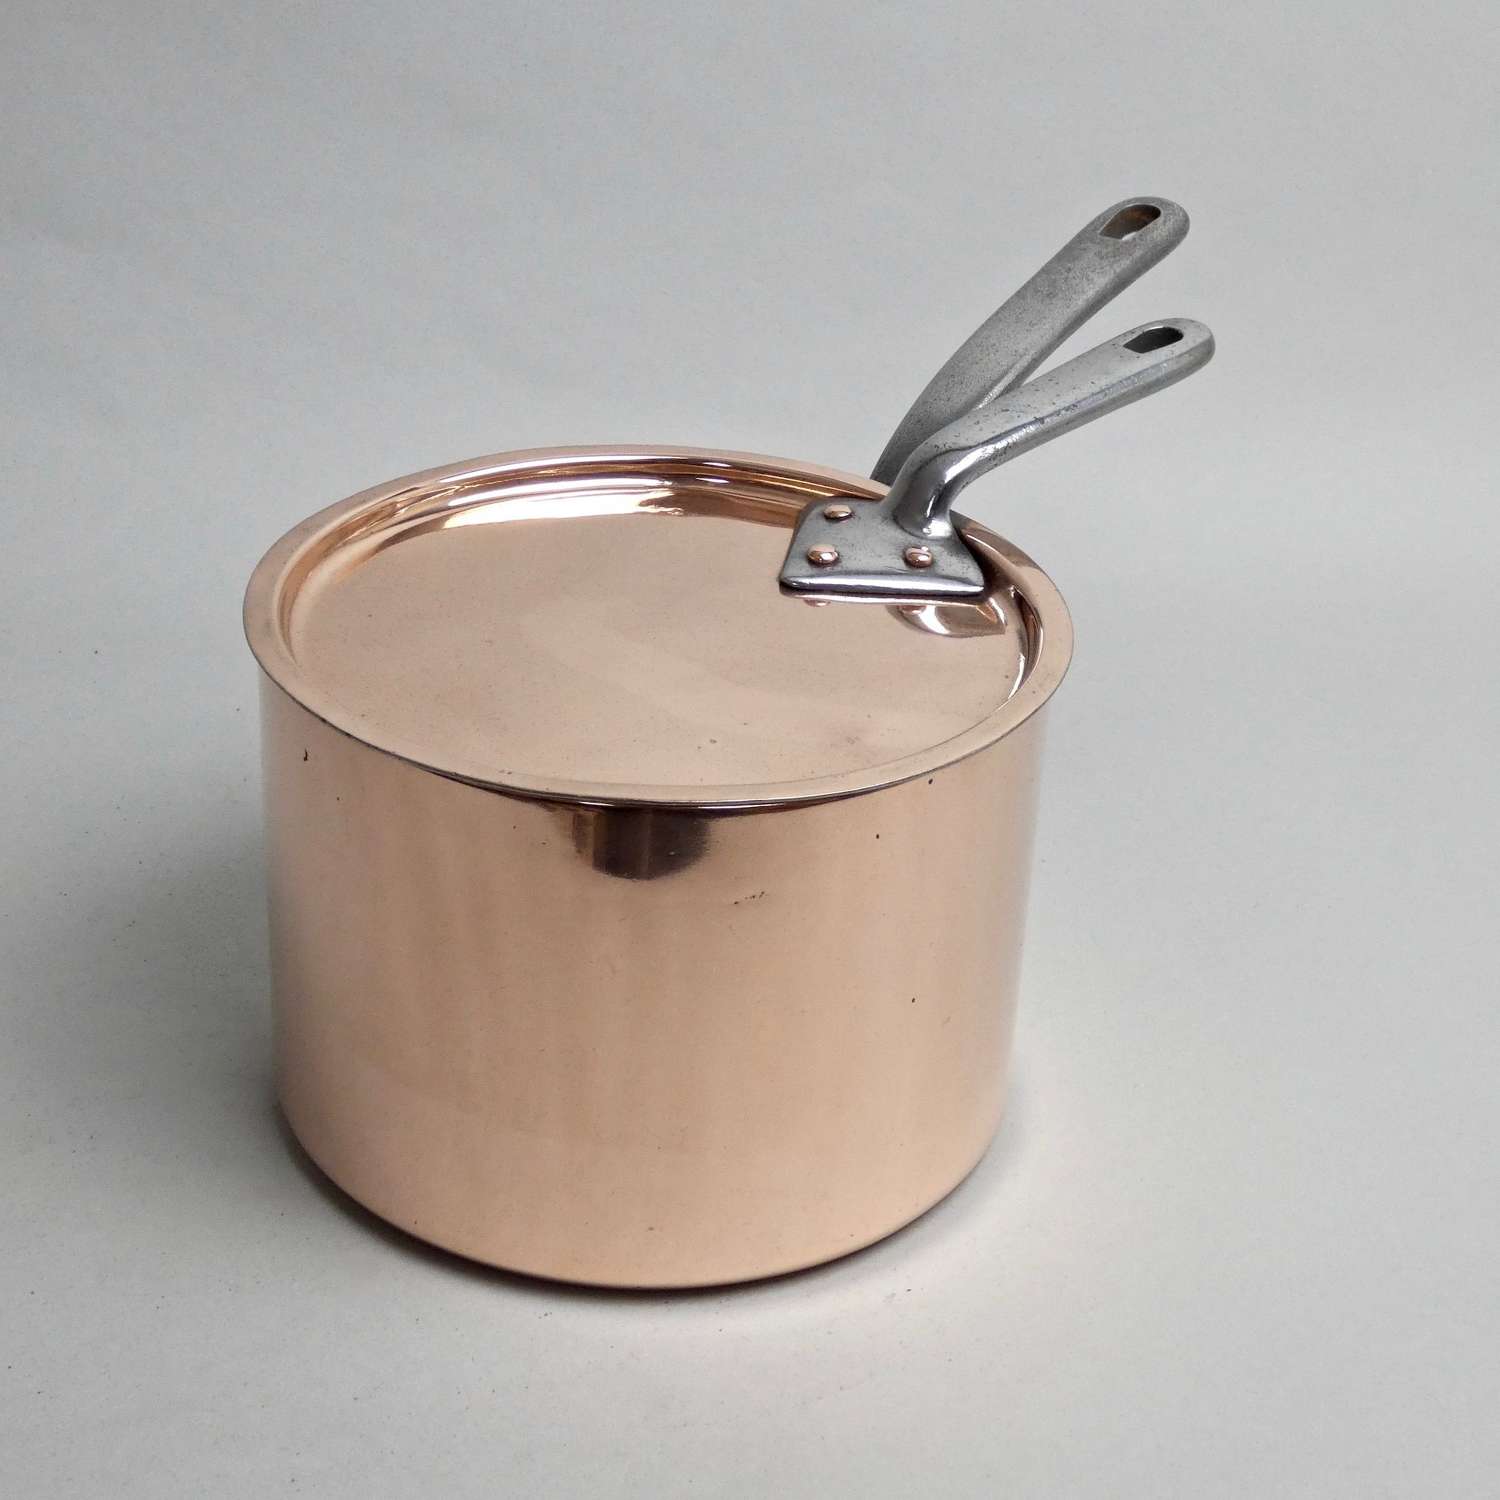 English copper saucepan